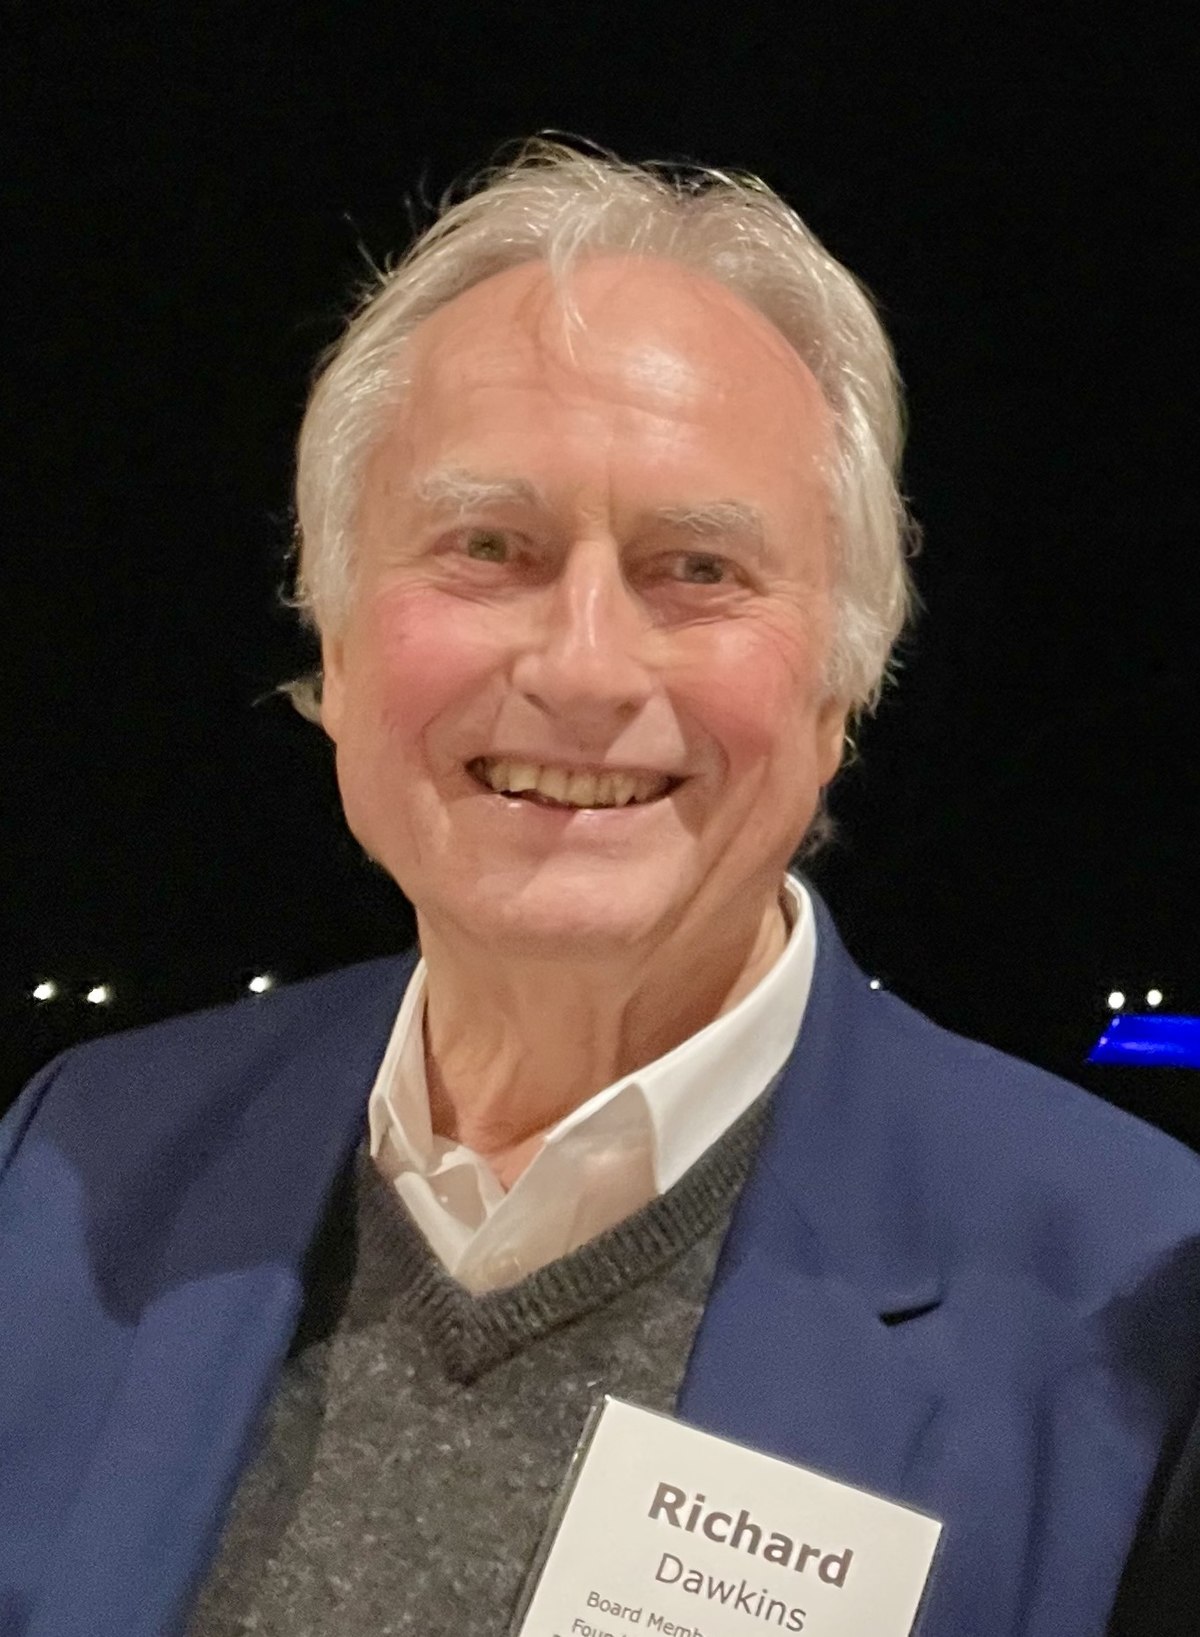 Richard Dawkins - Wikipedia